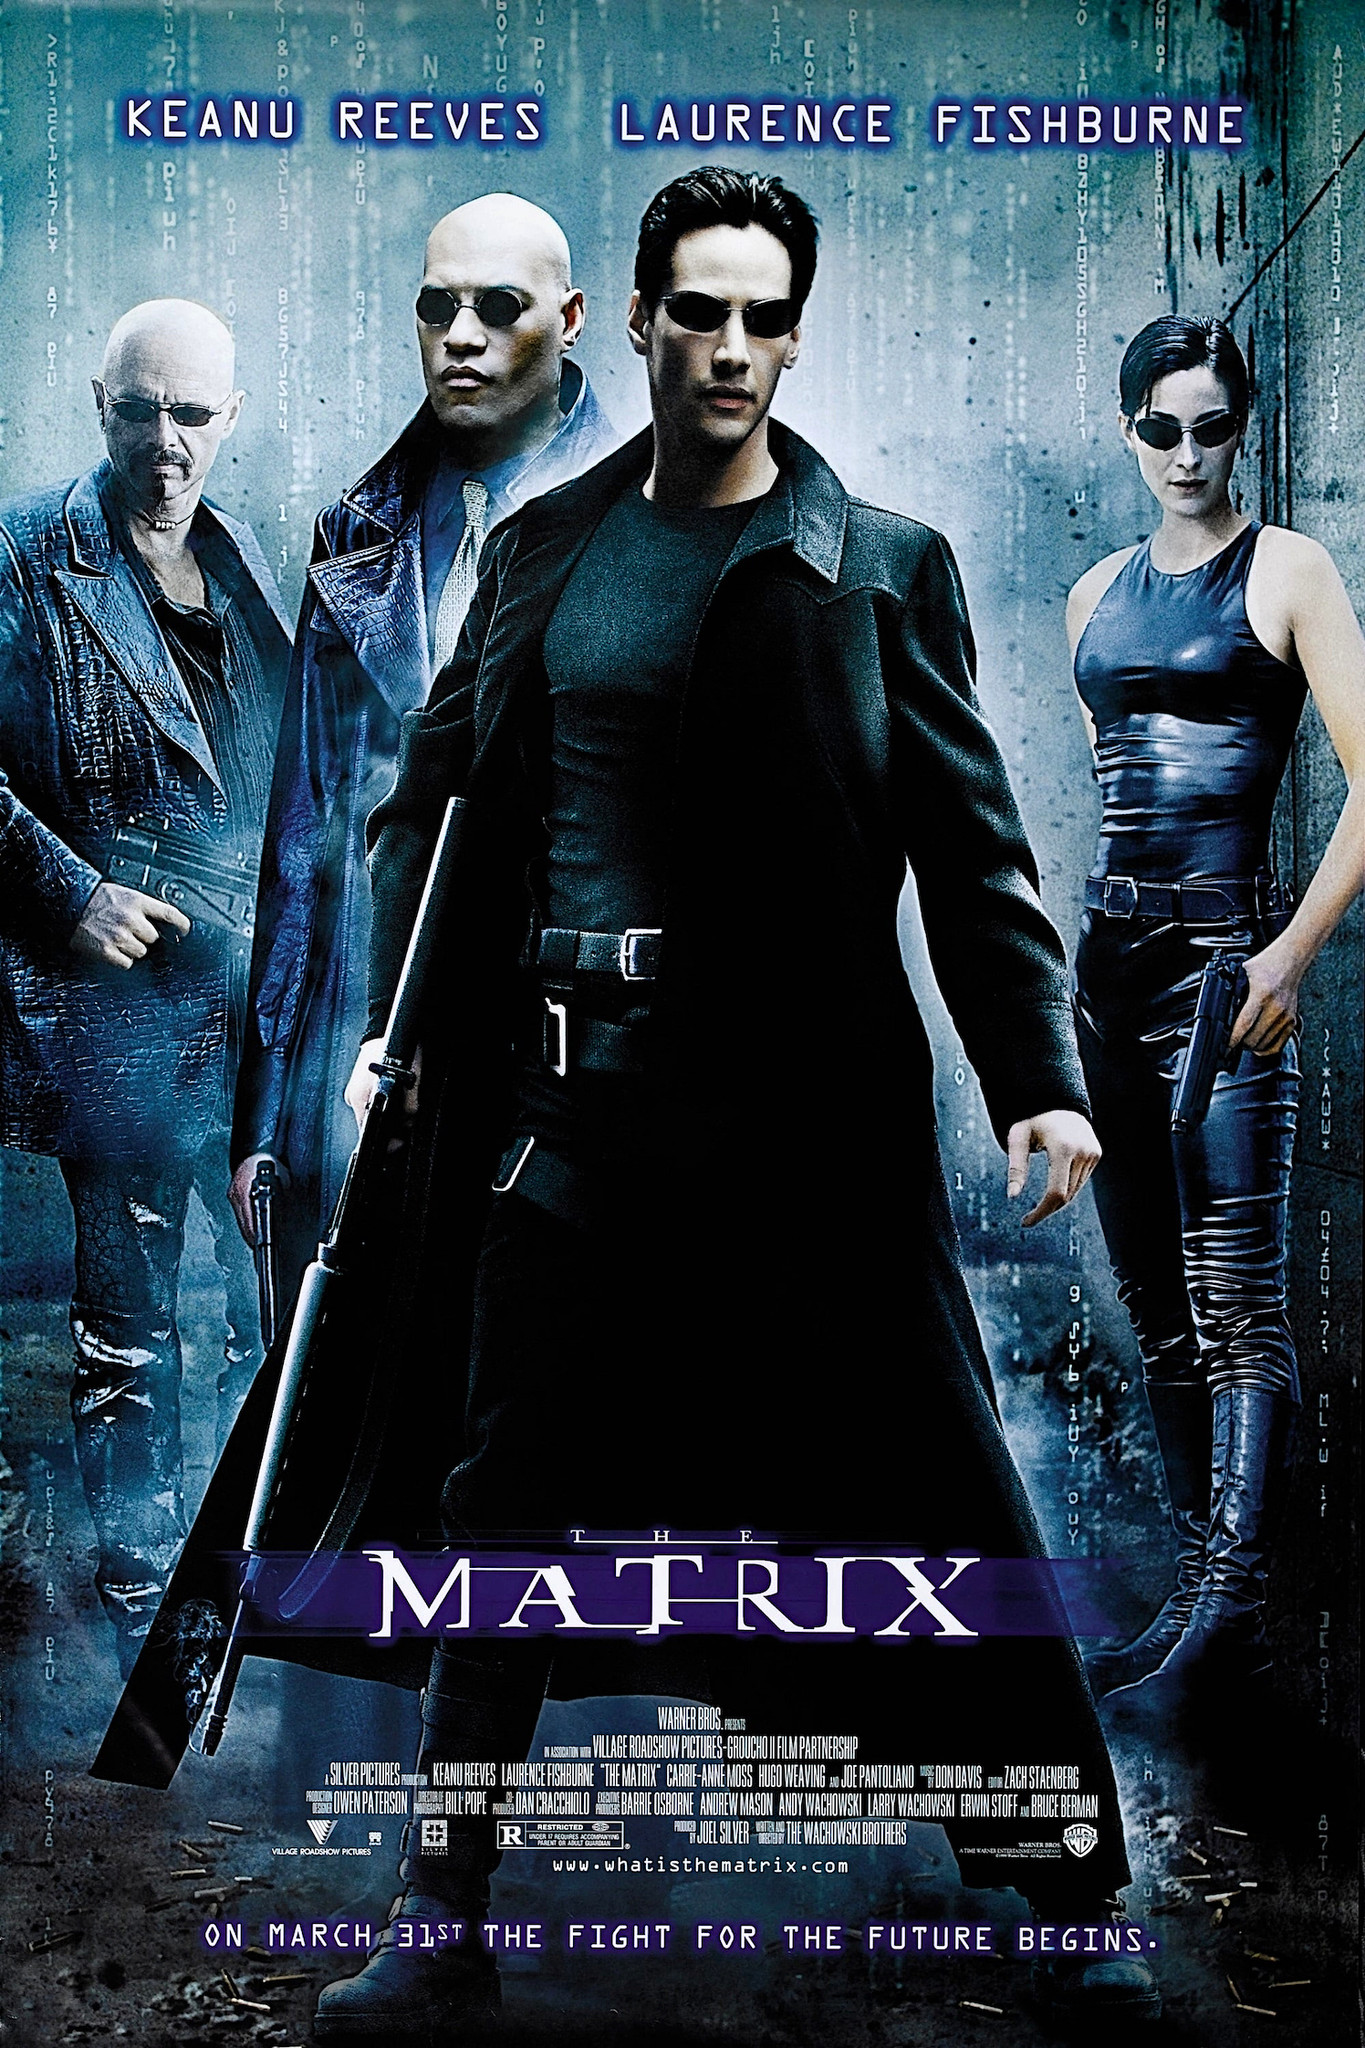 Poster - The Matrix, 1999 Keanu Reeves, originele Filmposter, verpakt in stevige kartonnen rolkoker